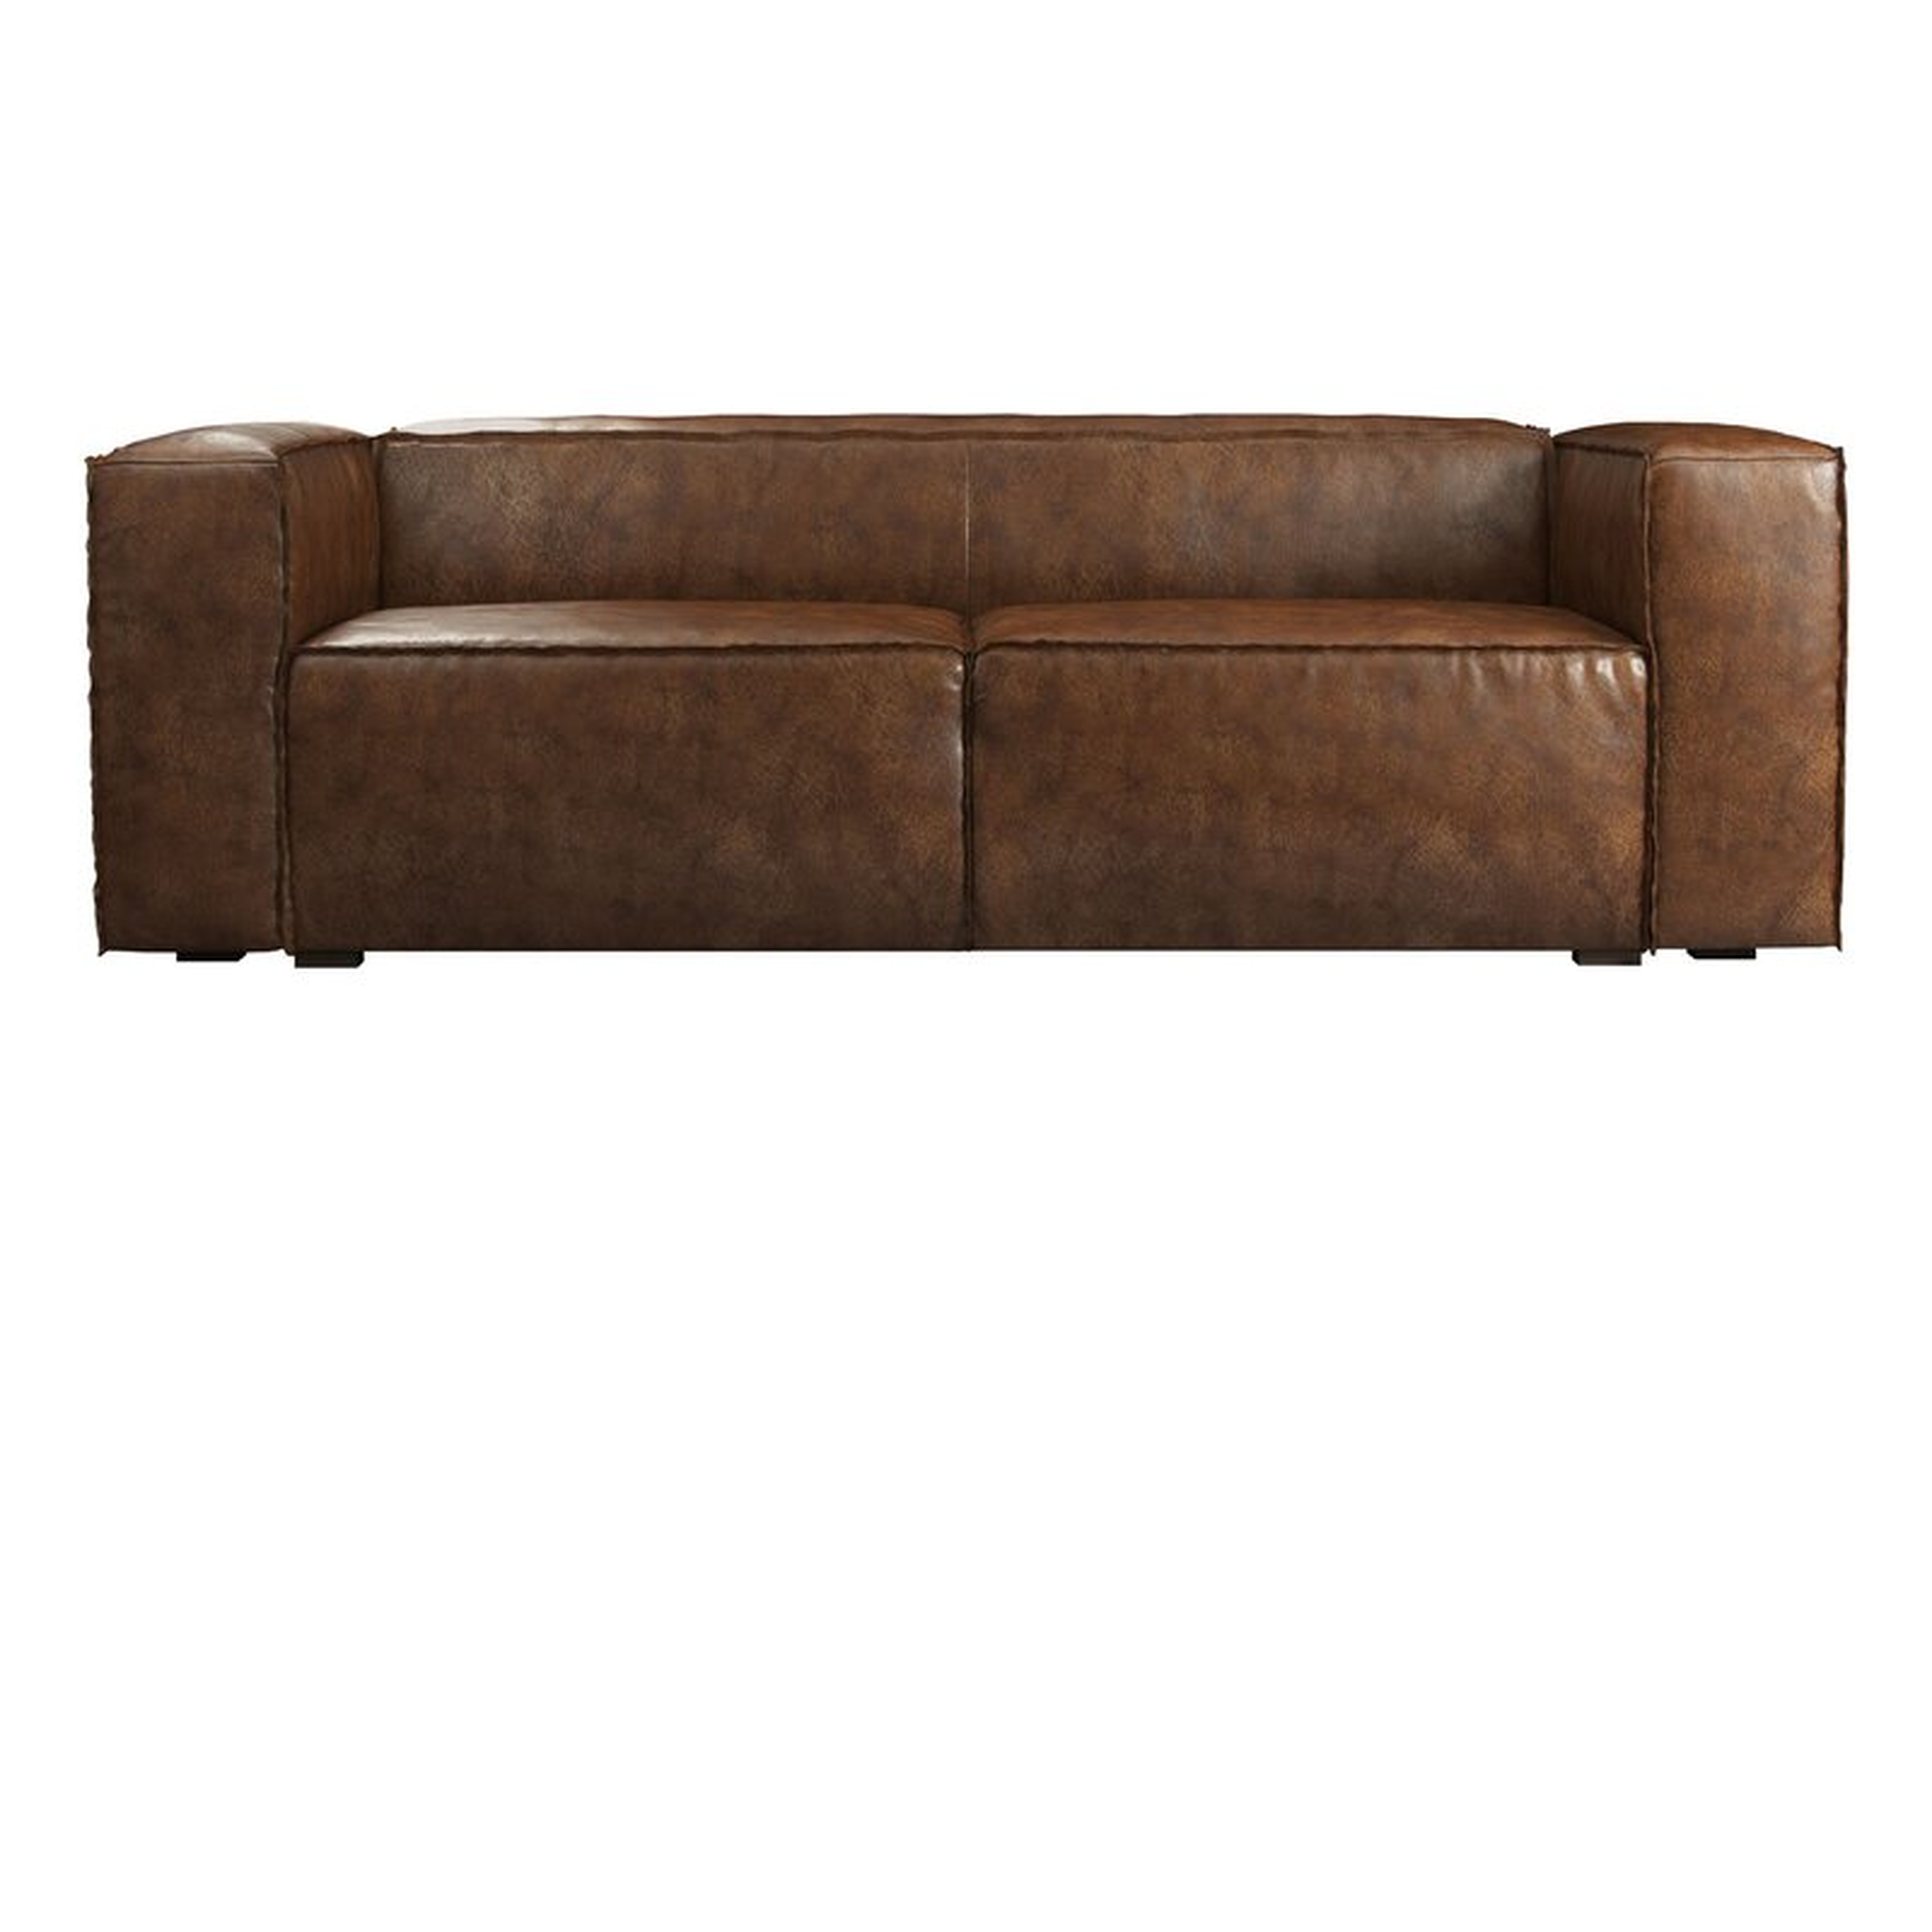 Modloft Black Dominick Leather Sofa Bed Fabric: Aged Whisky Genuine Leather - Perigold